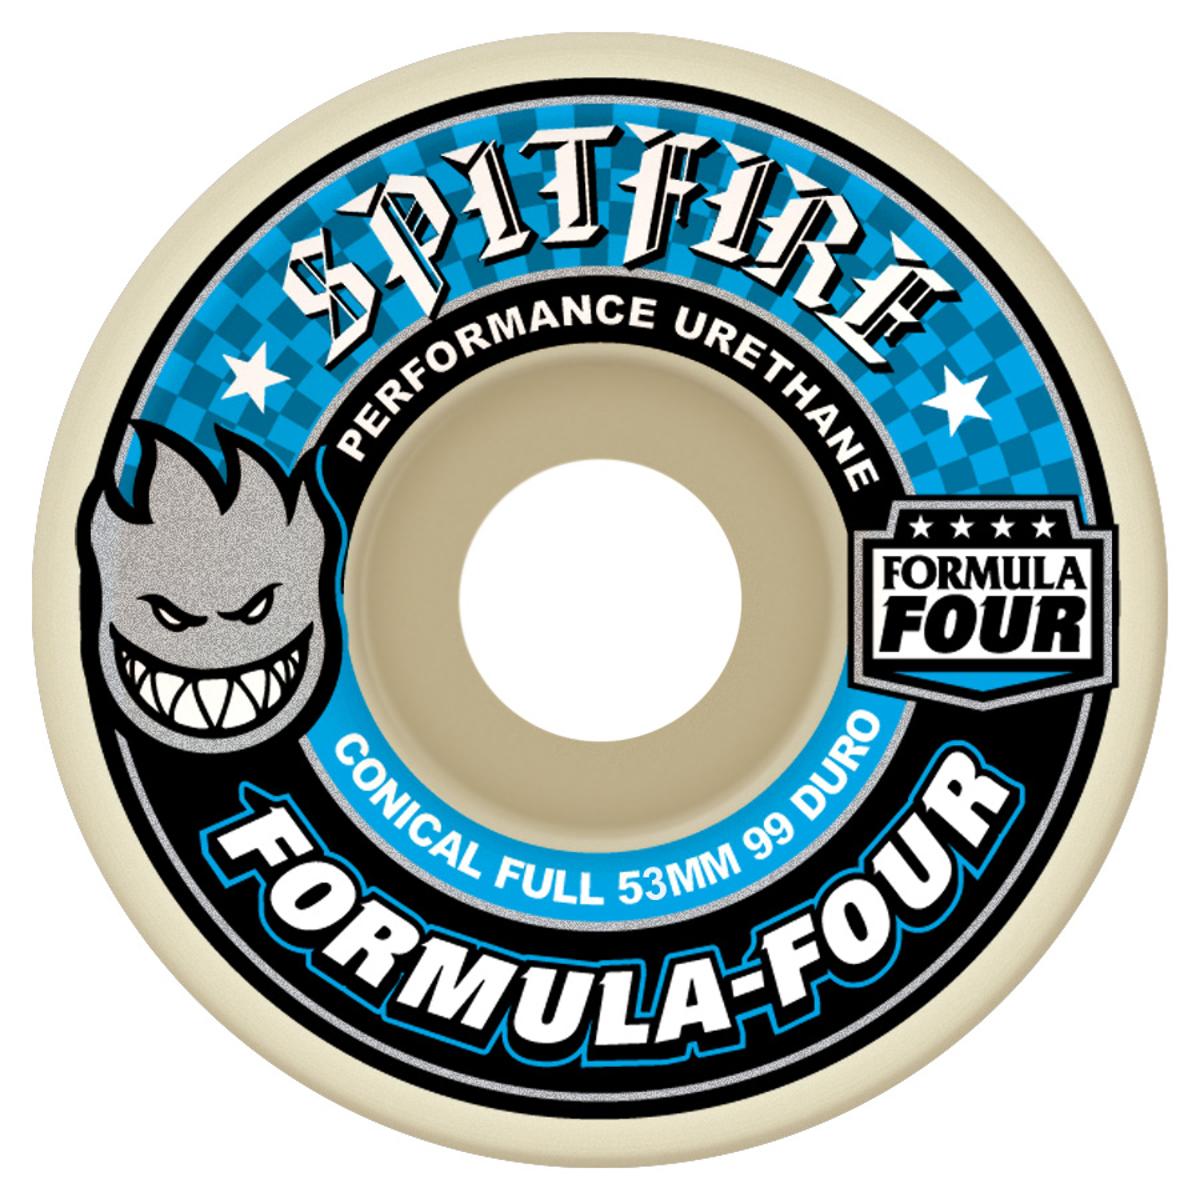 Spitfire F4 99D Concl Full 53mm Roues de skateboard 99a